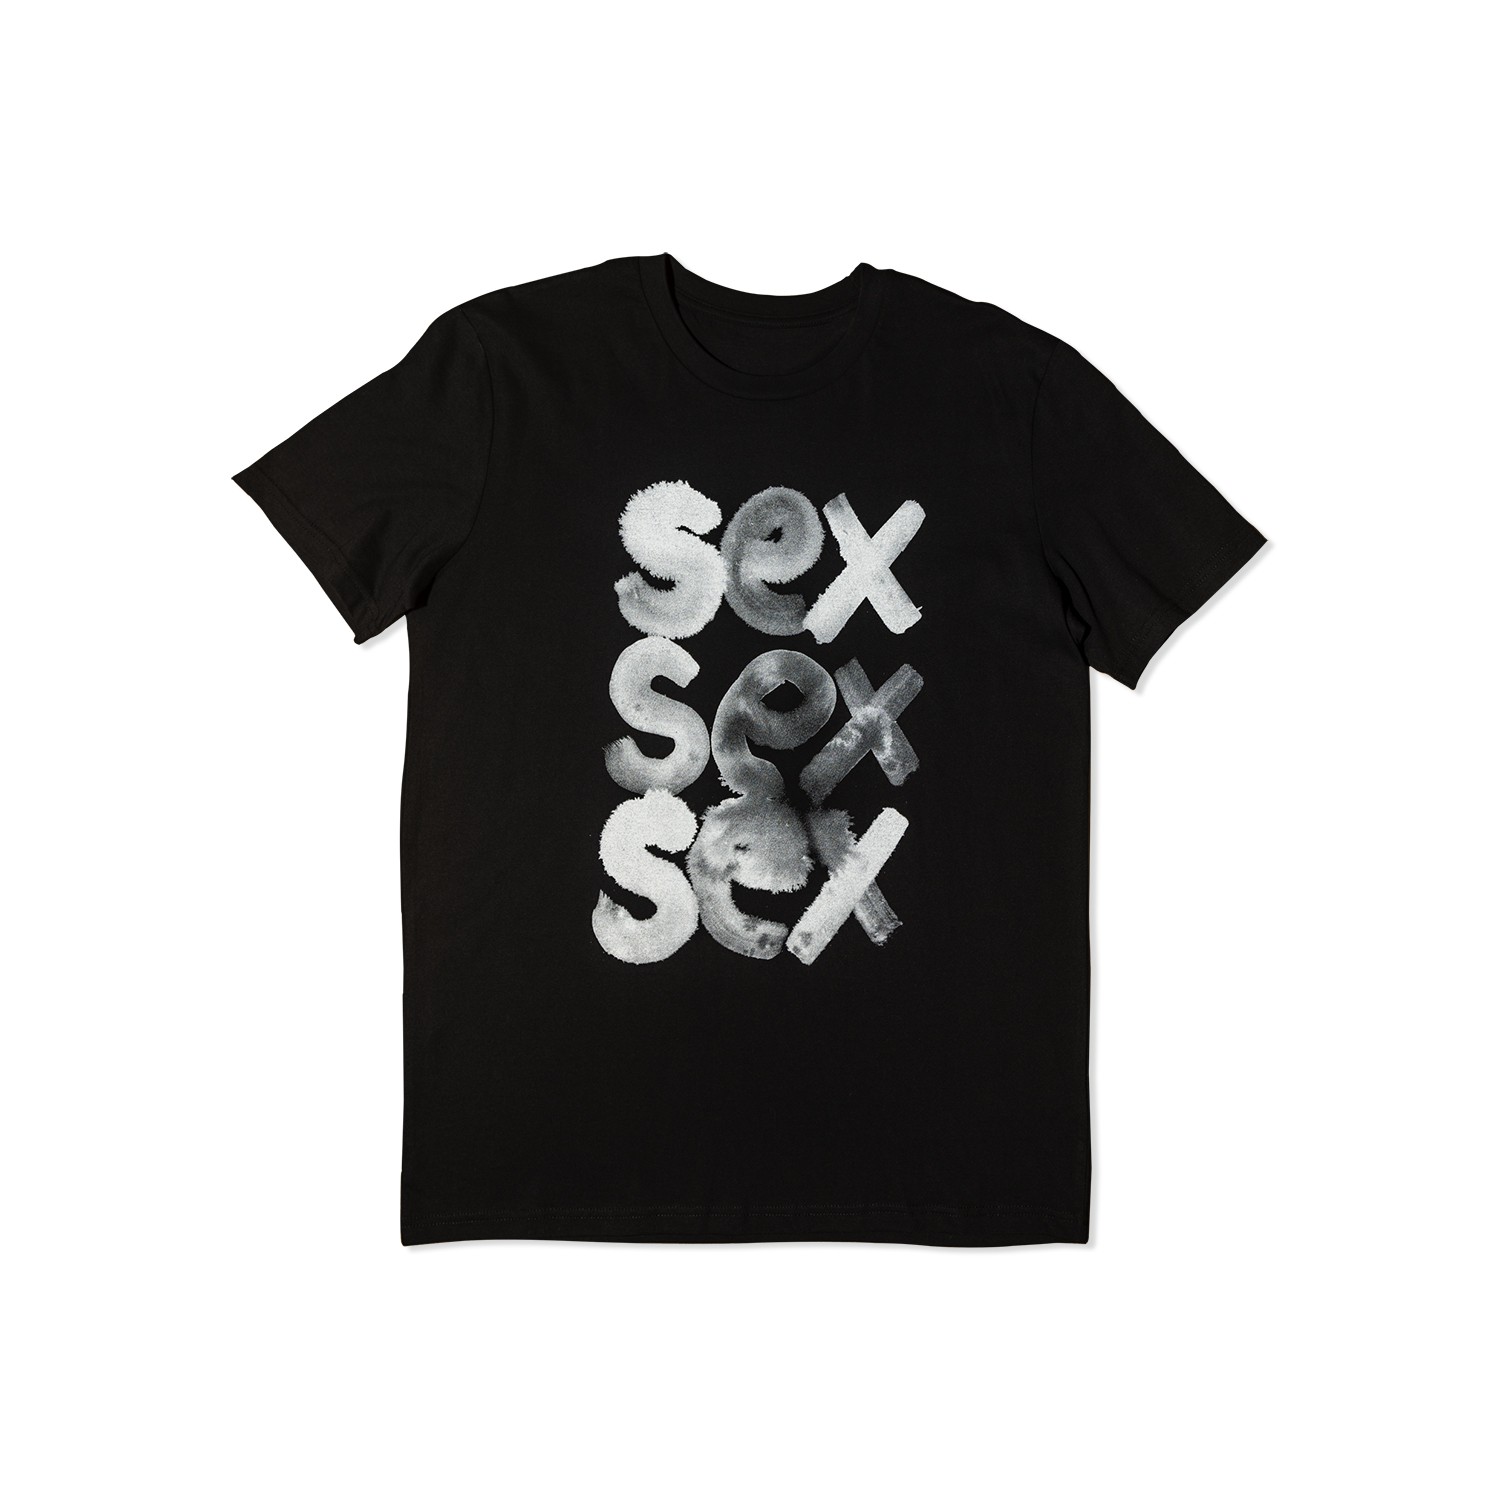 BRANDÃO FABER HUNGER - T-Shirt Sex Sex Sex - Medium, Black